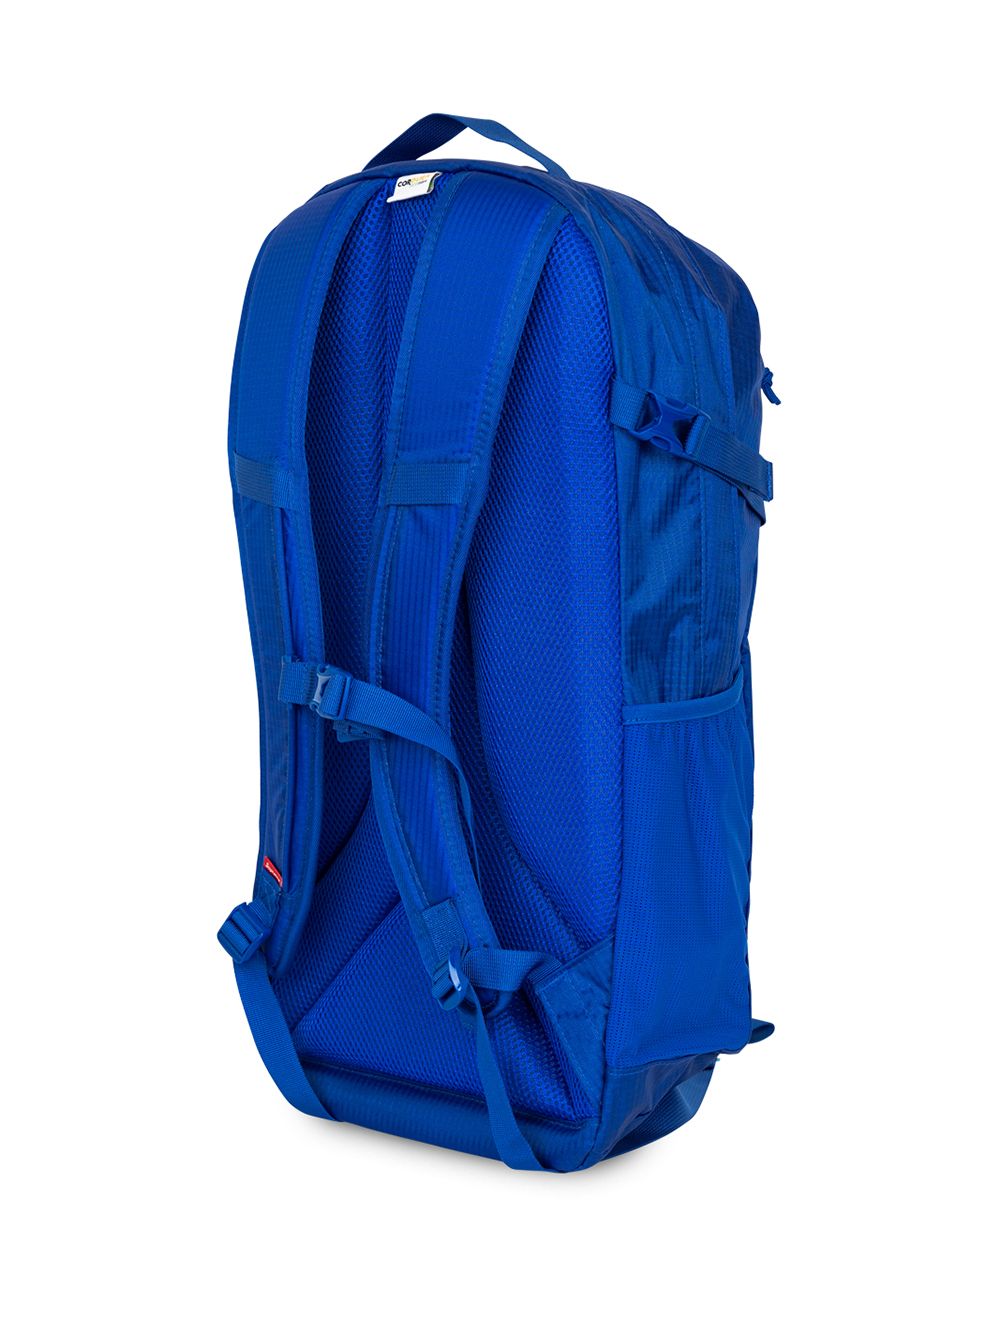 Supreme logo-print backpack SS 21 - ShopStyle